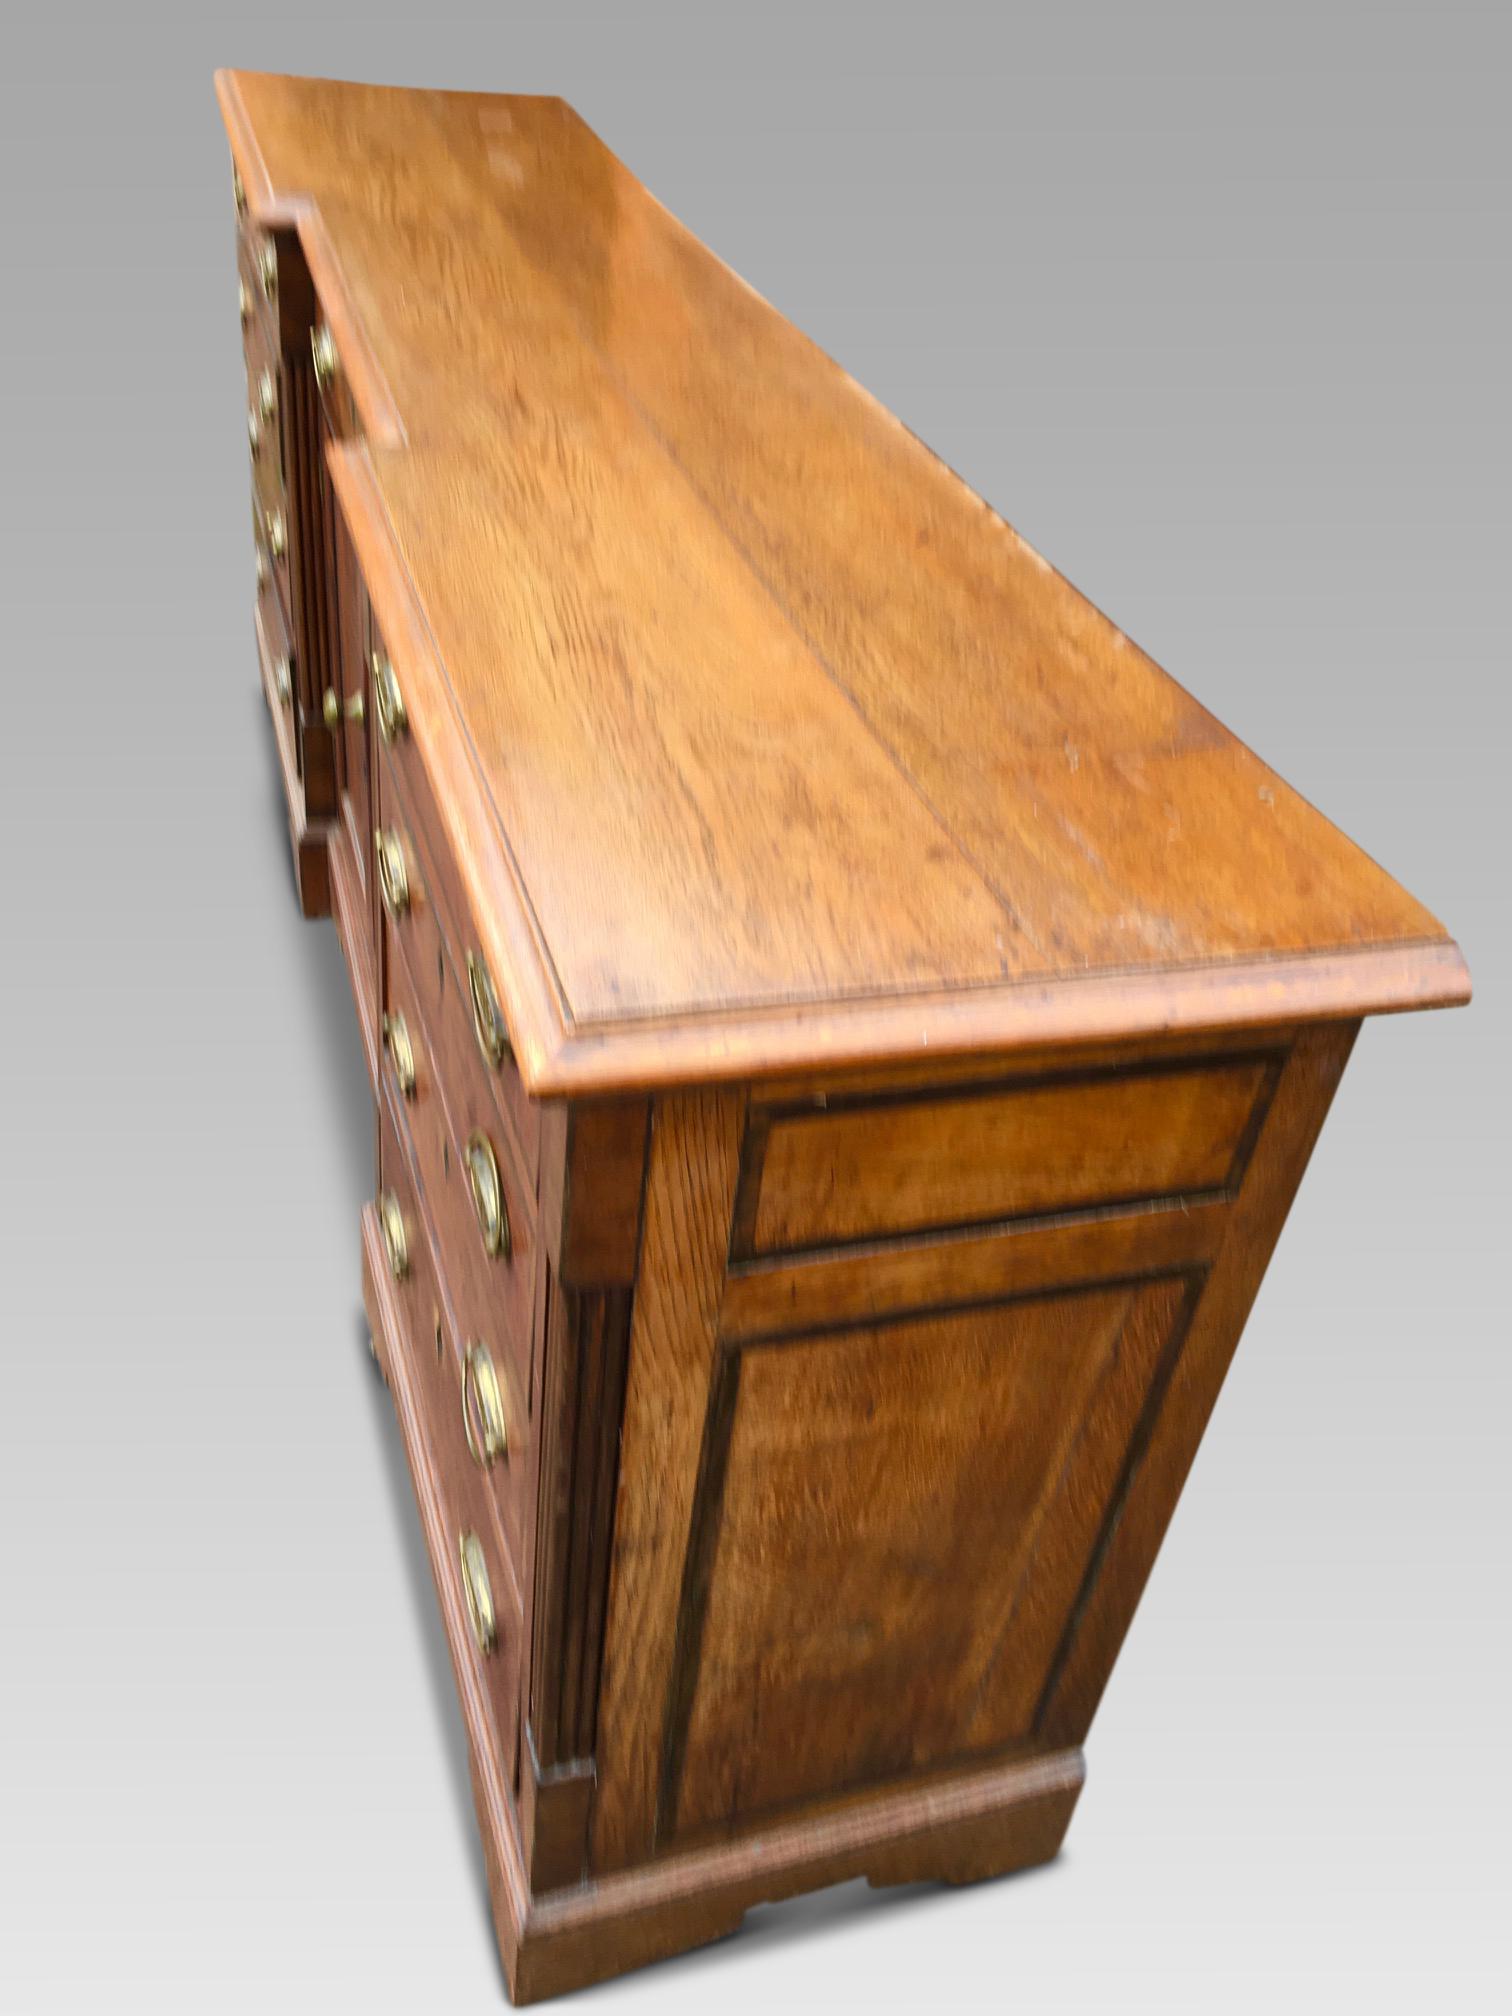 Hand-Crafted Oak Dresser Base, C 1820 English